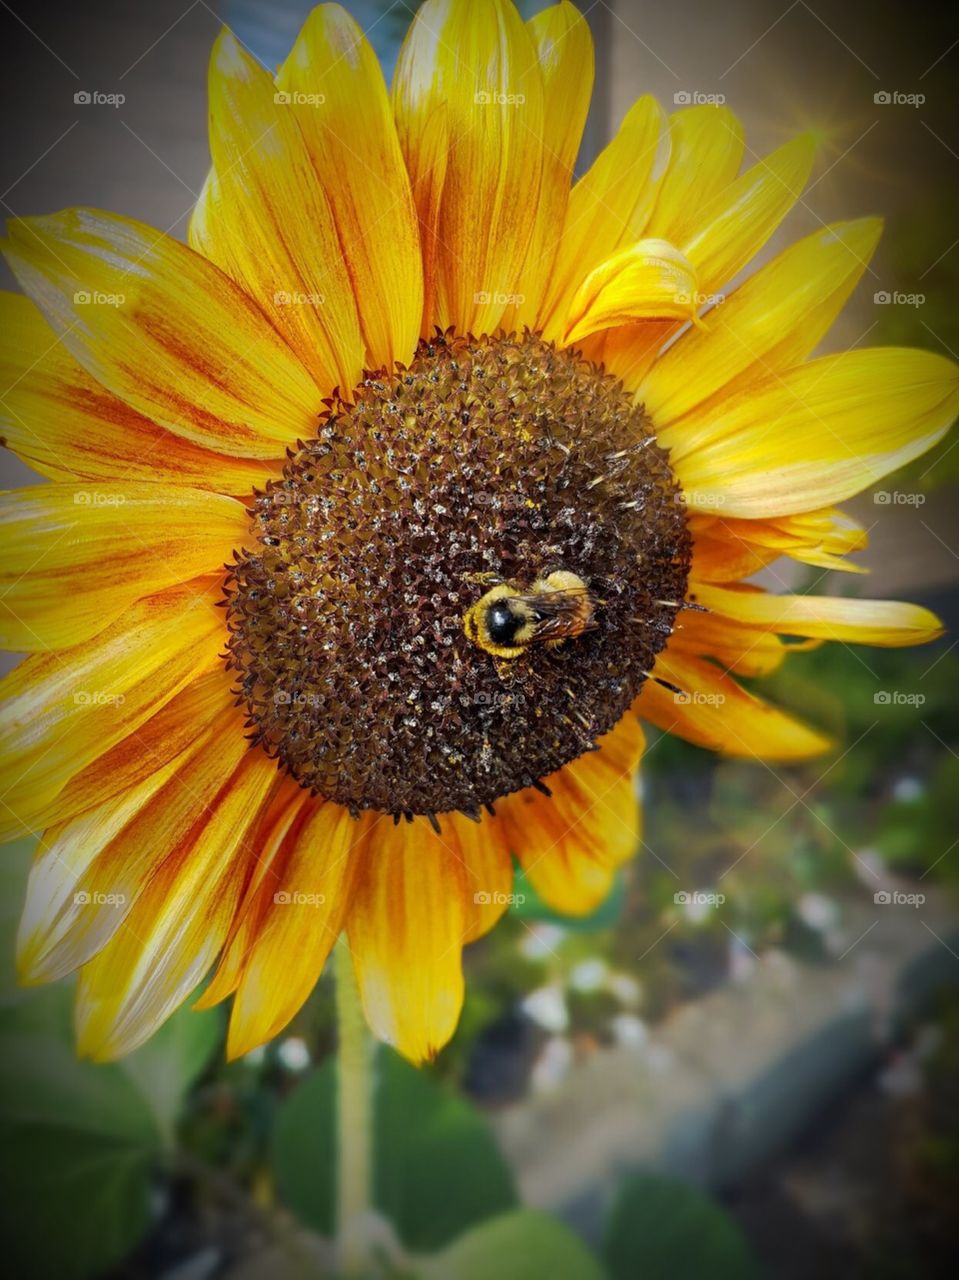 Bumblebee on a sunflower. 